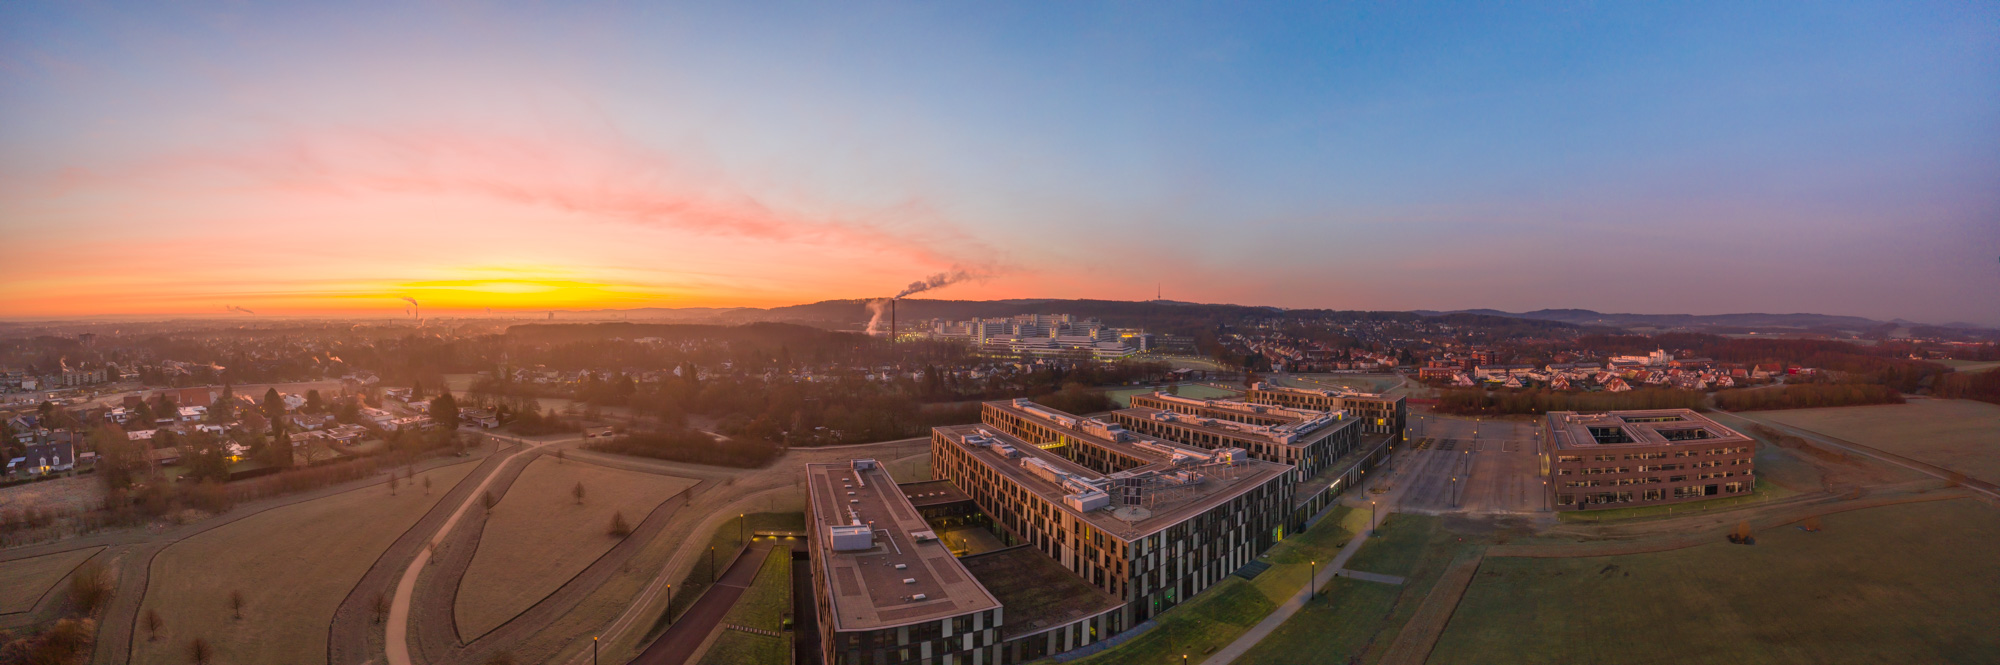 University of Applied Sciences and University of Bielefeld in December 2019 (Bielefeld, Germany).